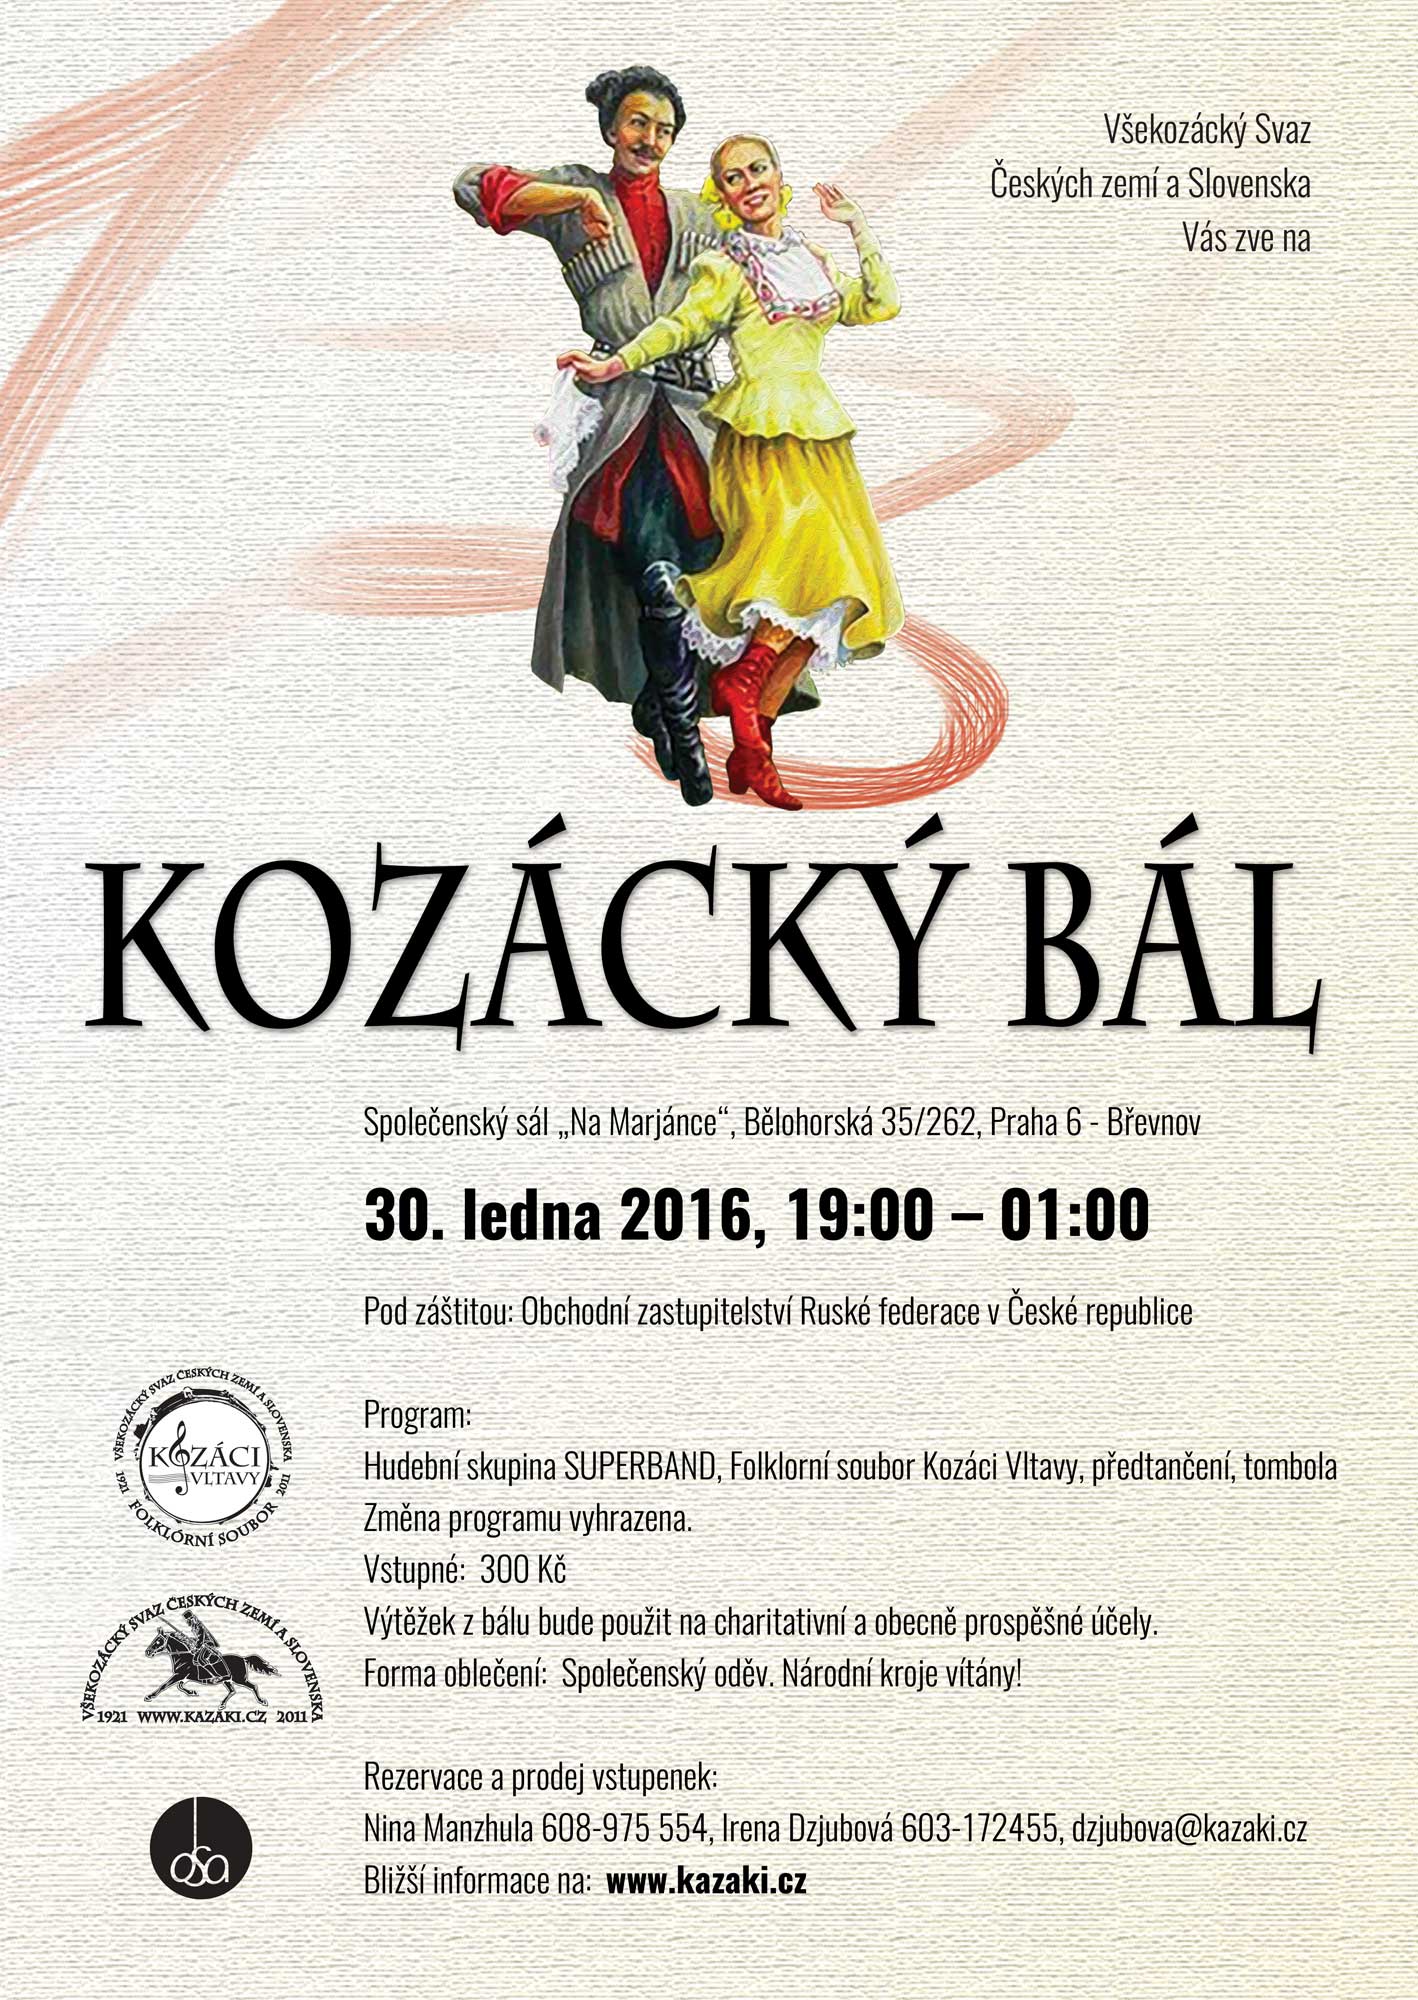 Kozacky bal 2016_CZ_plakat